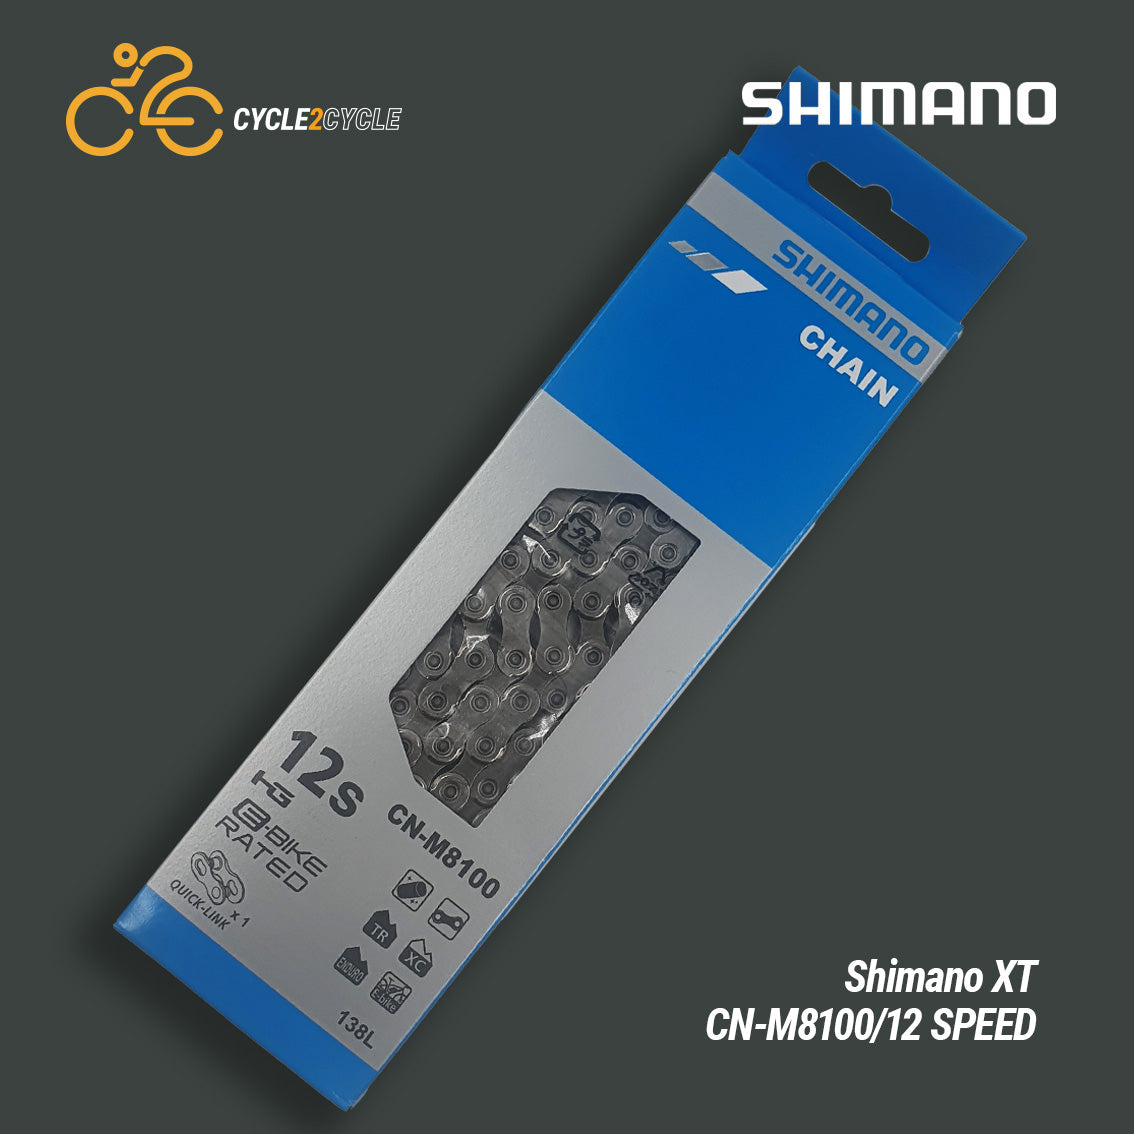 Shimano XT / CN-M8100